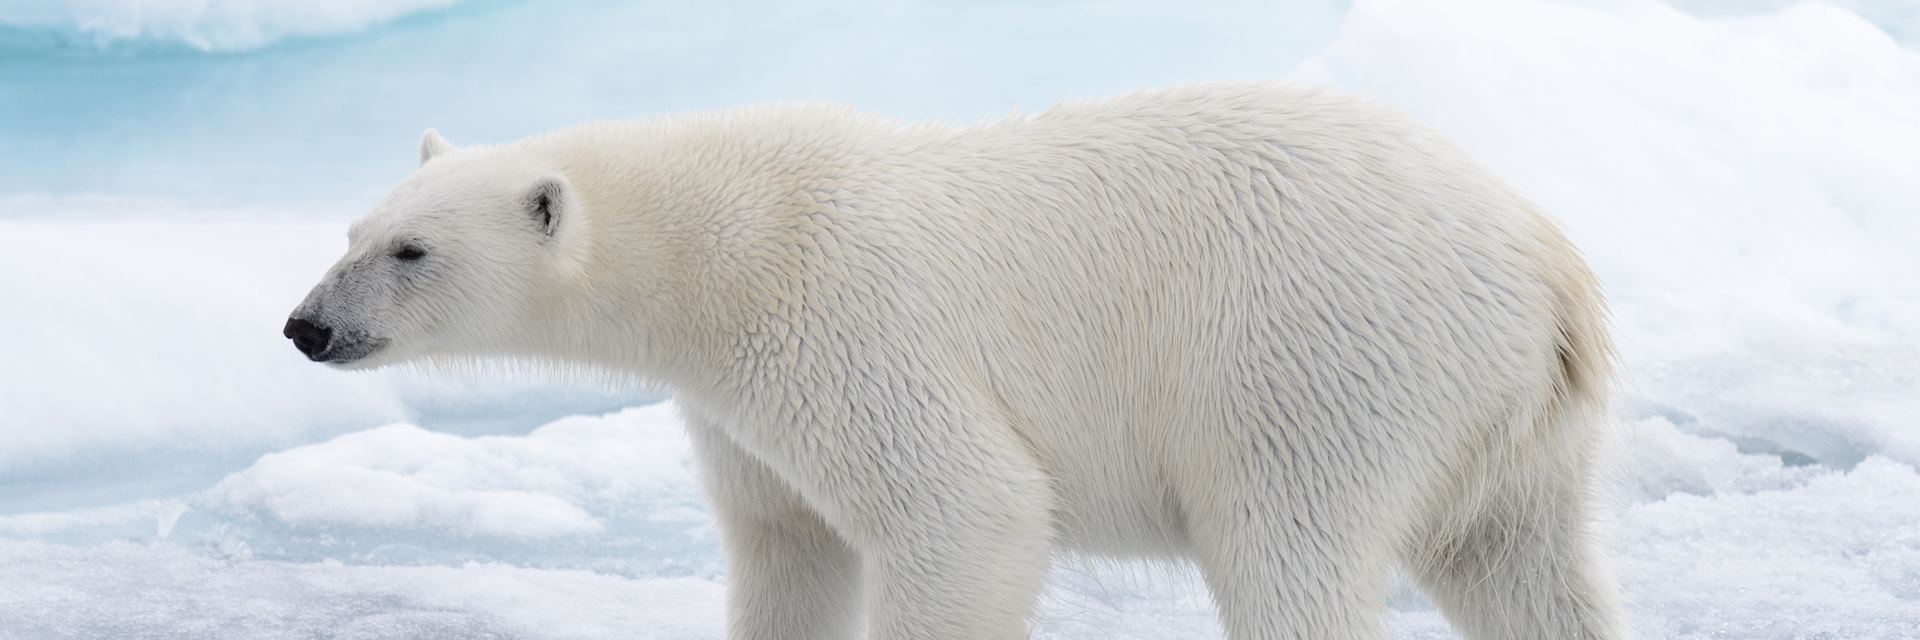 Polar bear in Barrow